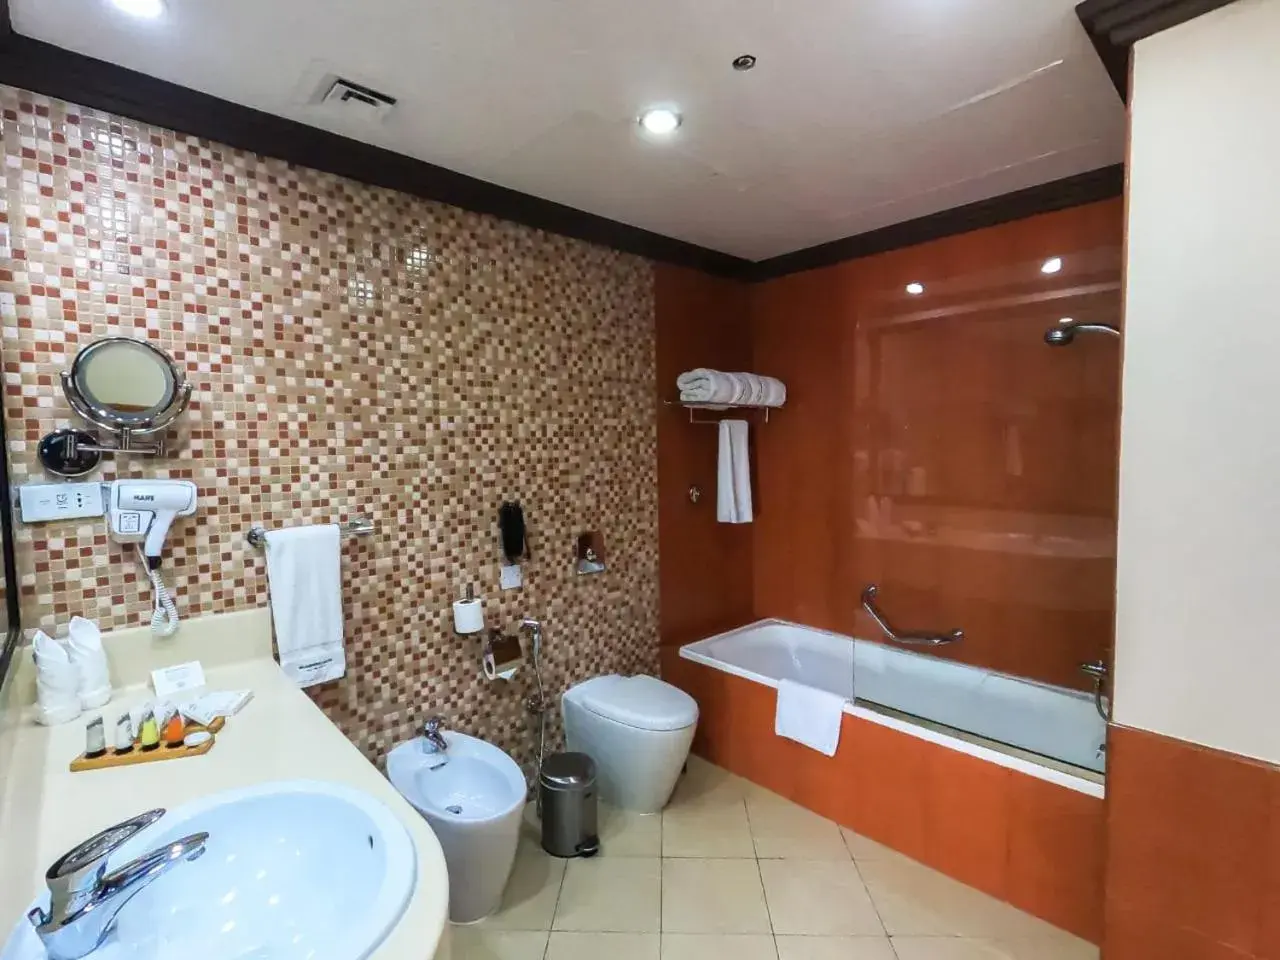 Bathroom in Mangrove Hotel - Ras al Khaimah